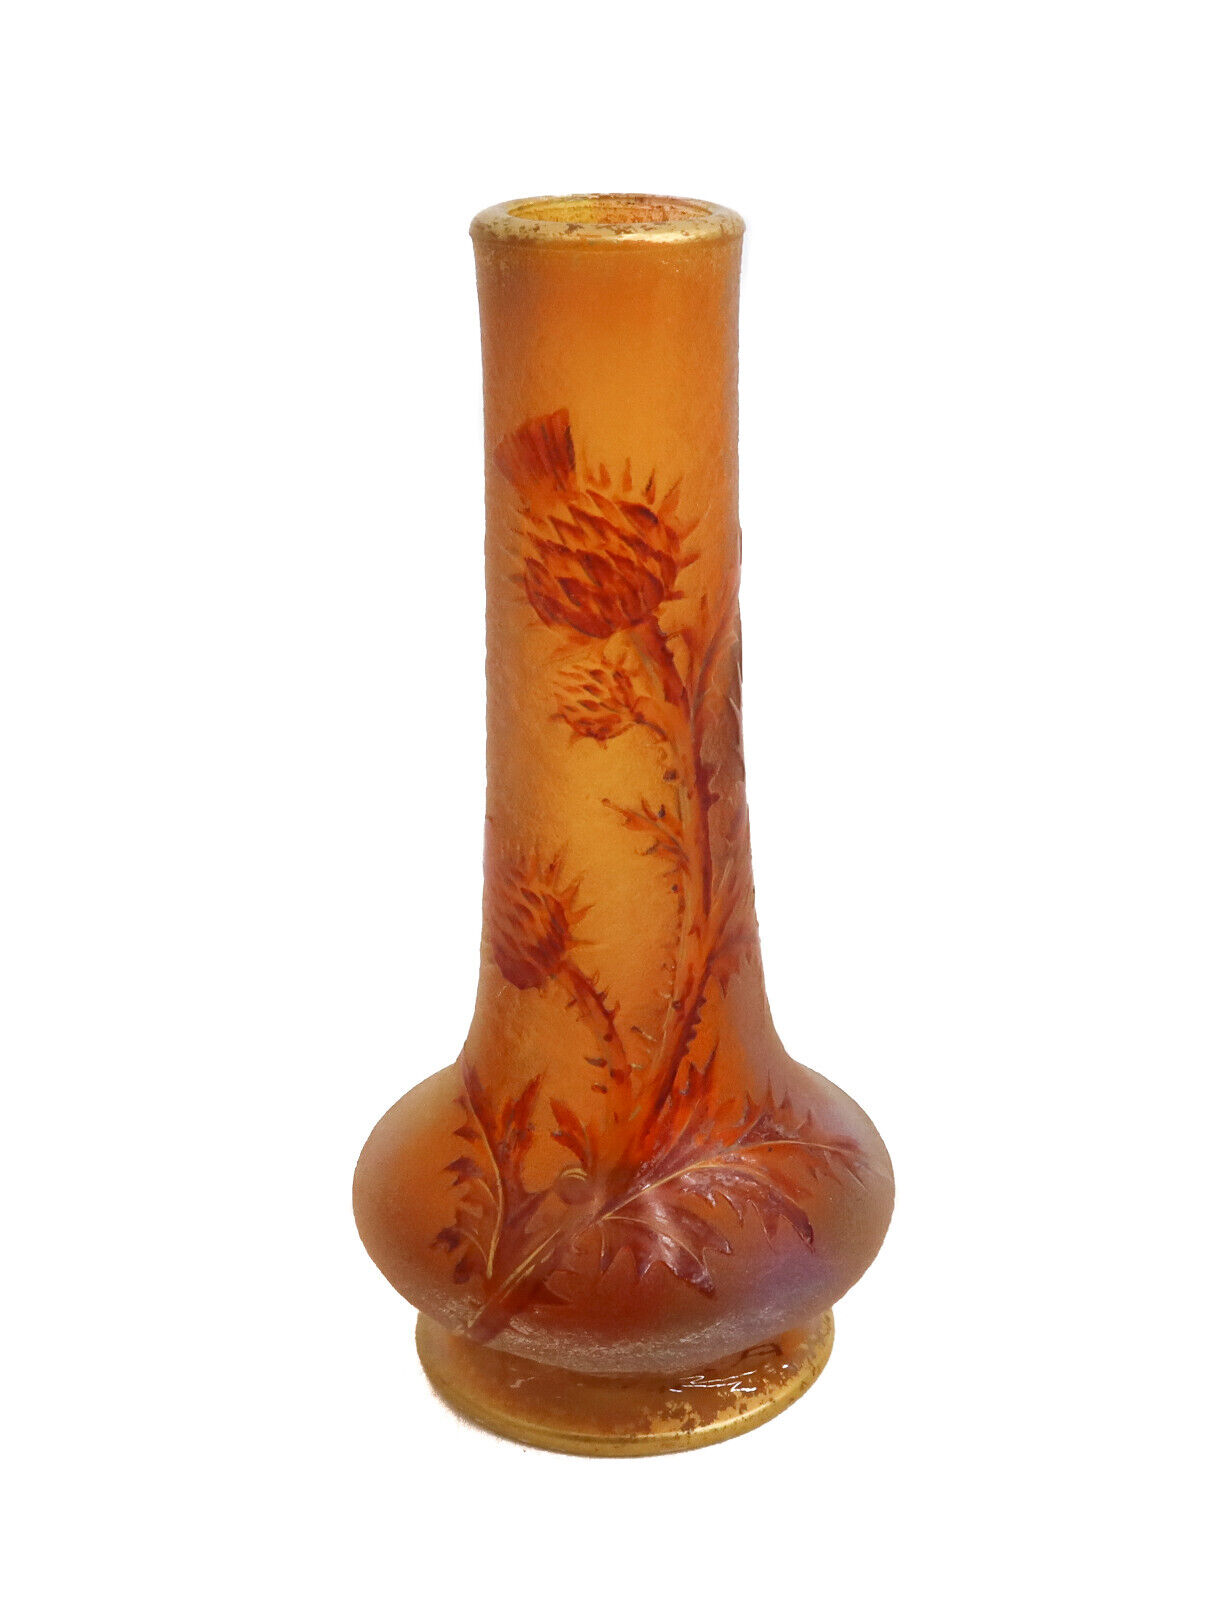 Daum Nancy France Acid Etched Orange and Gilt Thistle Glass Vase c1900